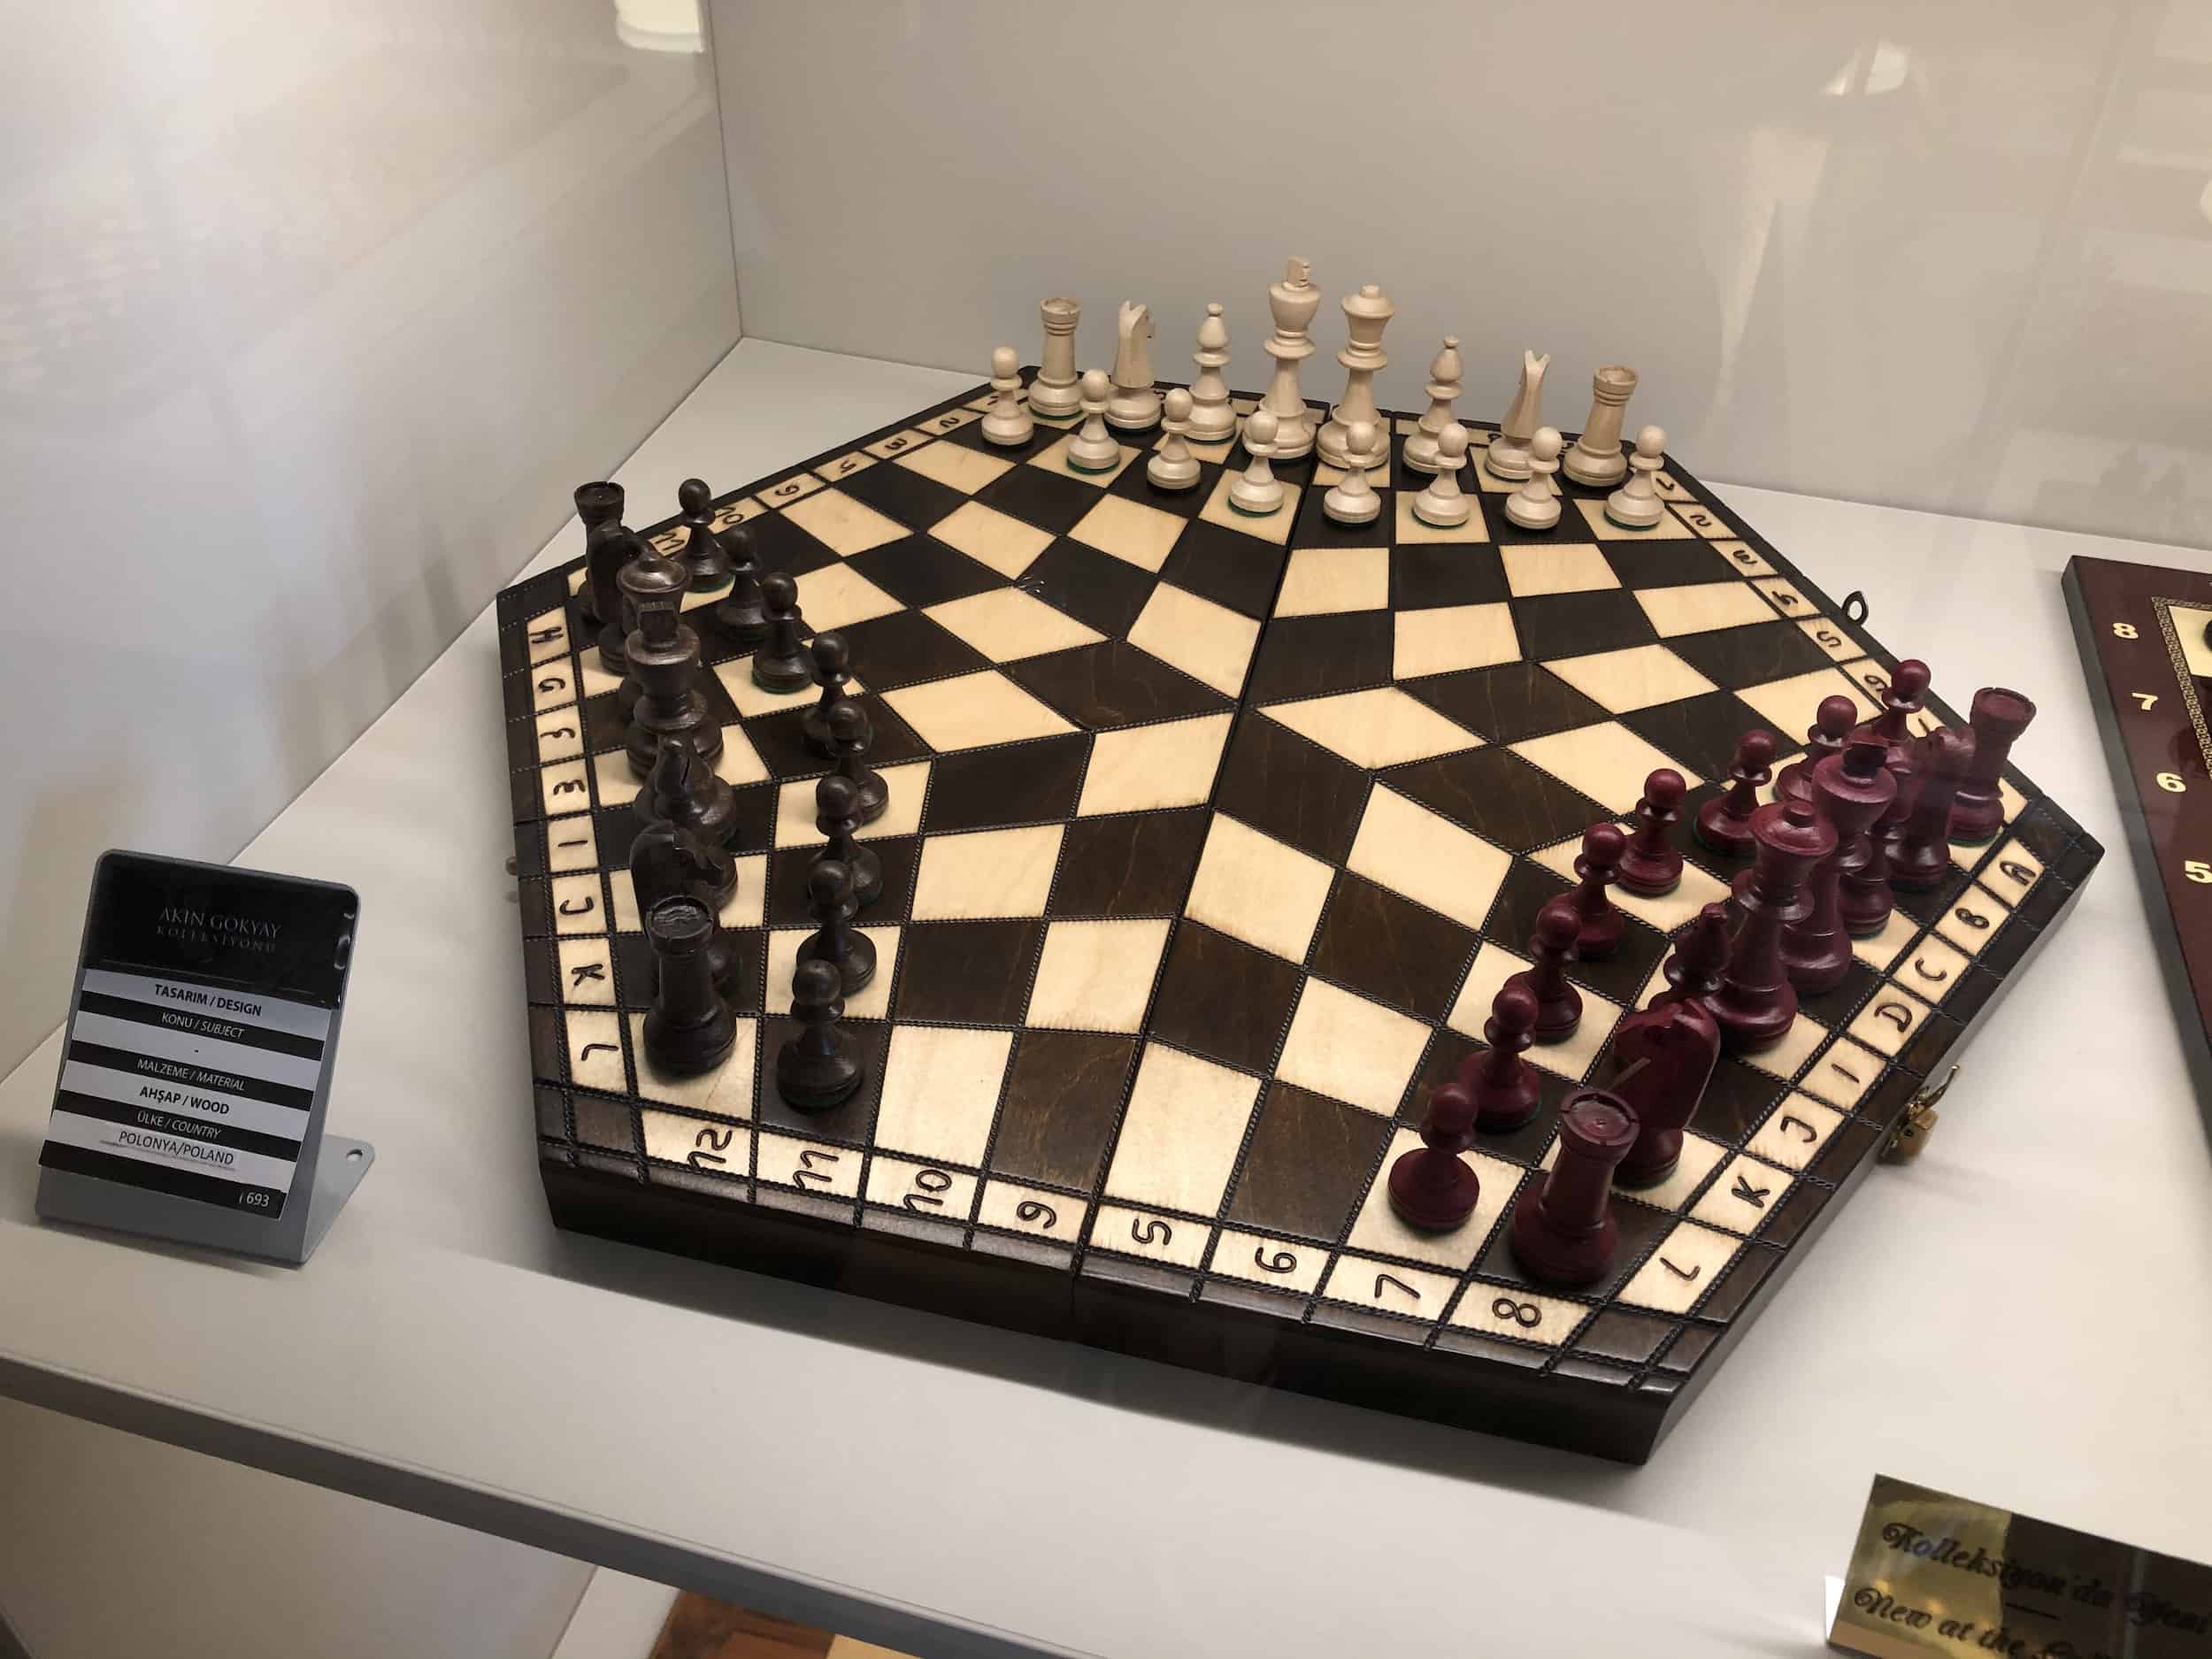 Triple chess set (Poland) at the Gökyay Foundation Chess Museum in Ankara, Turkey